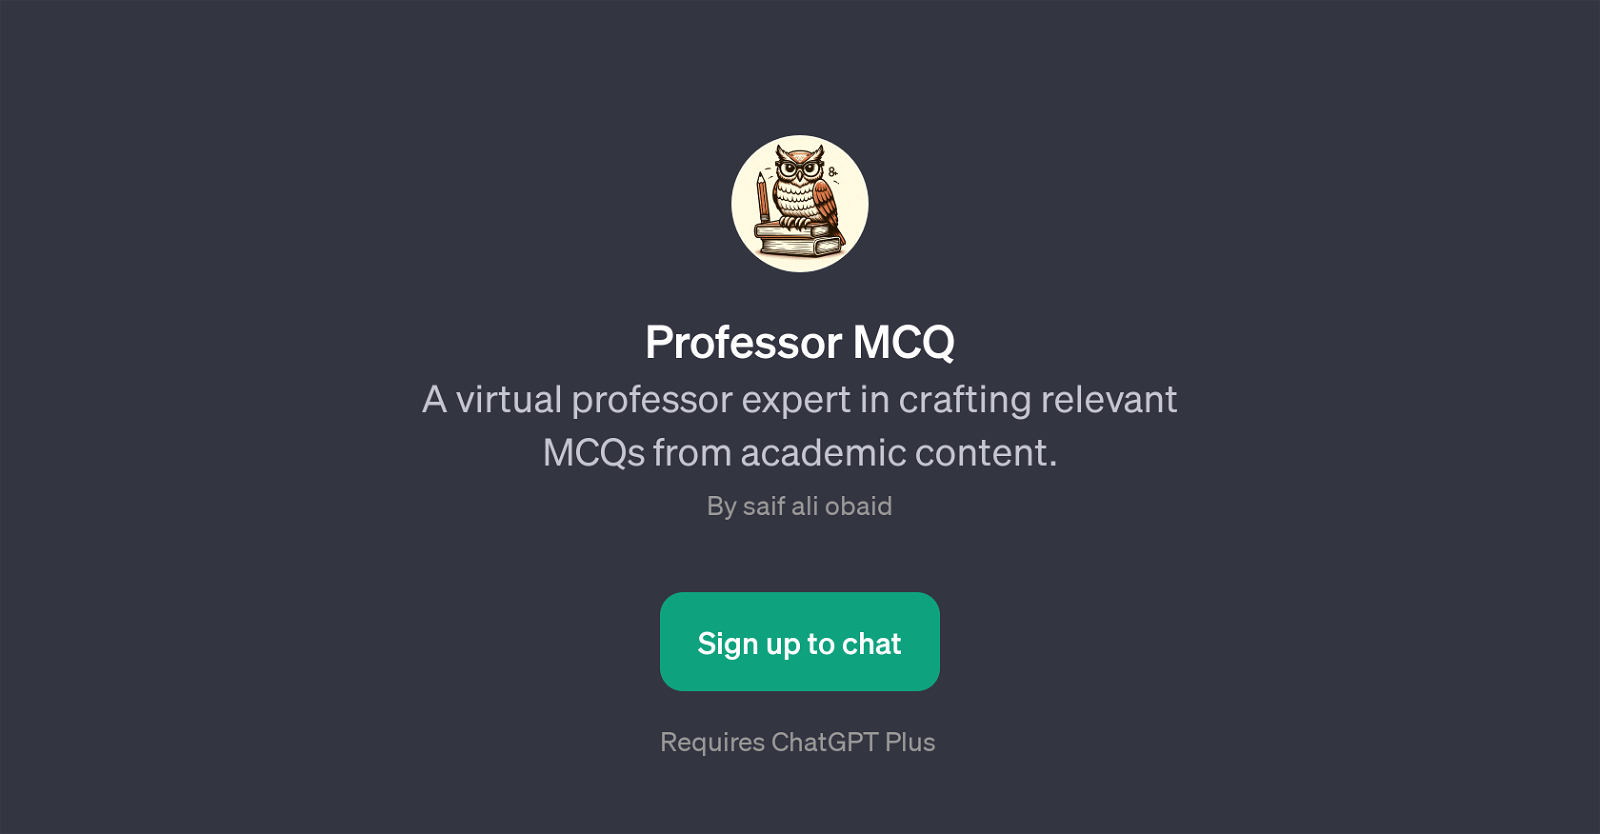 Professor MCQ website